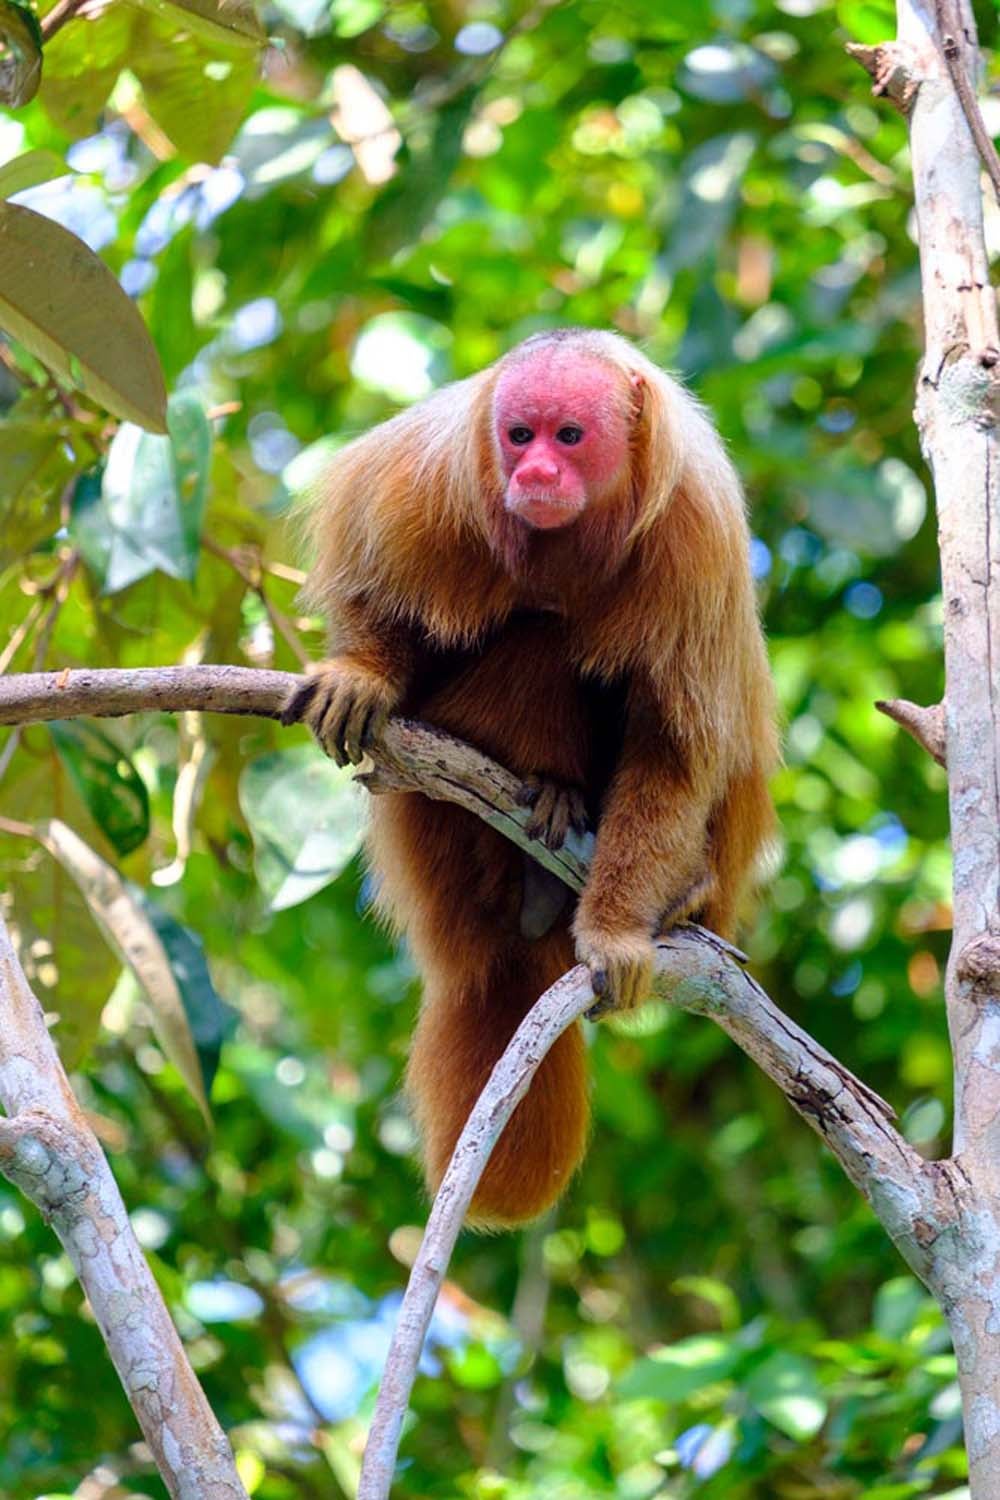 A bald uakari monkey in the Amazon